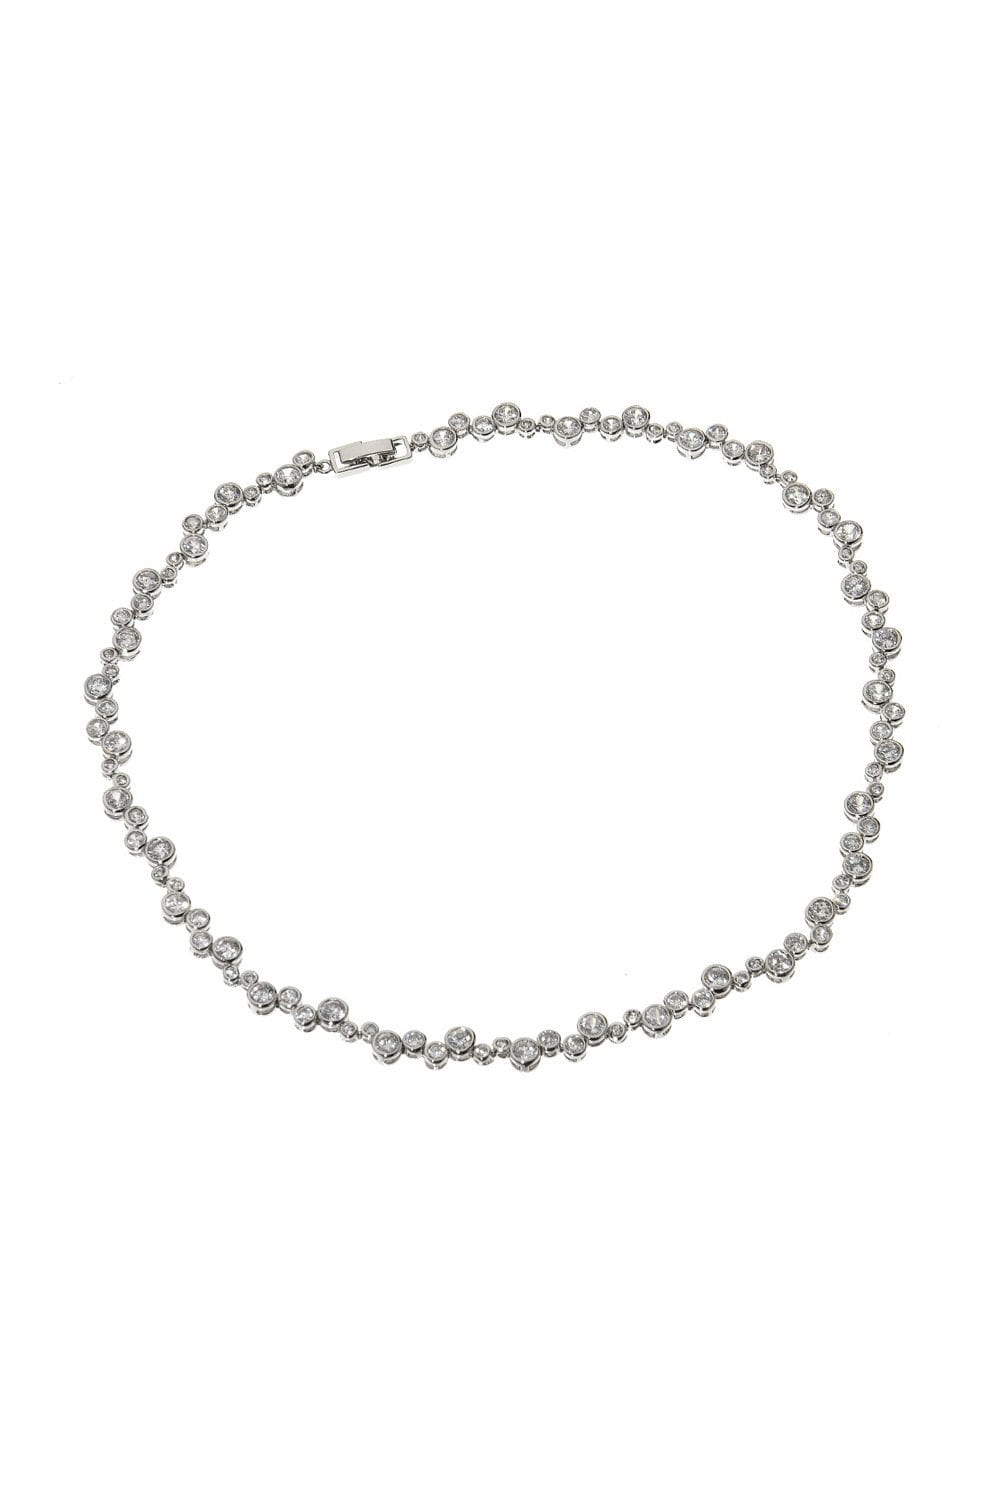 Shop For Prive - Celebration Necklace – Jessica Bridal